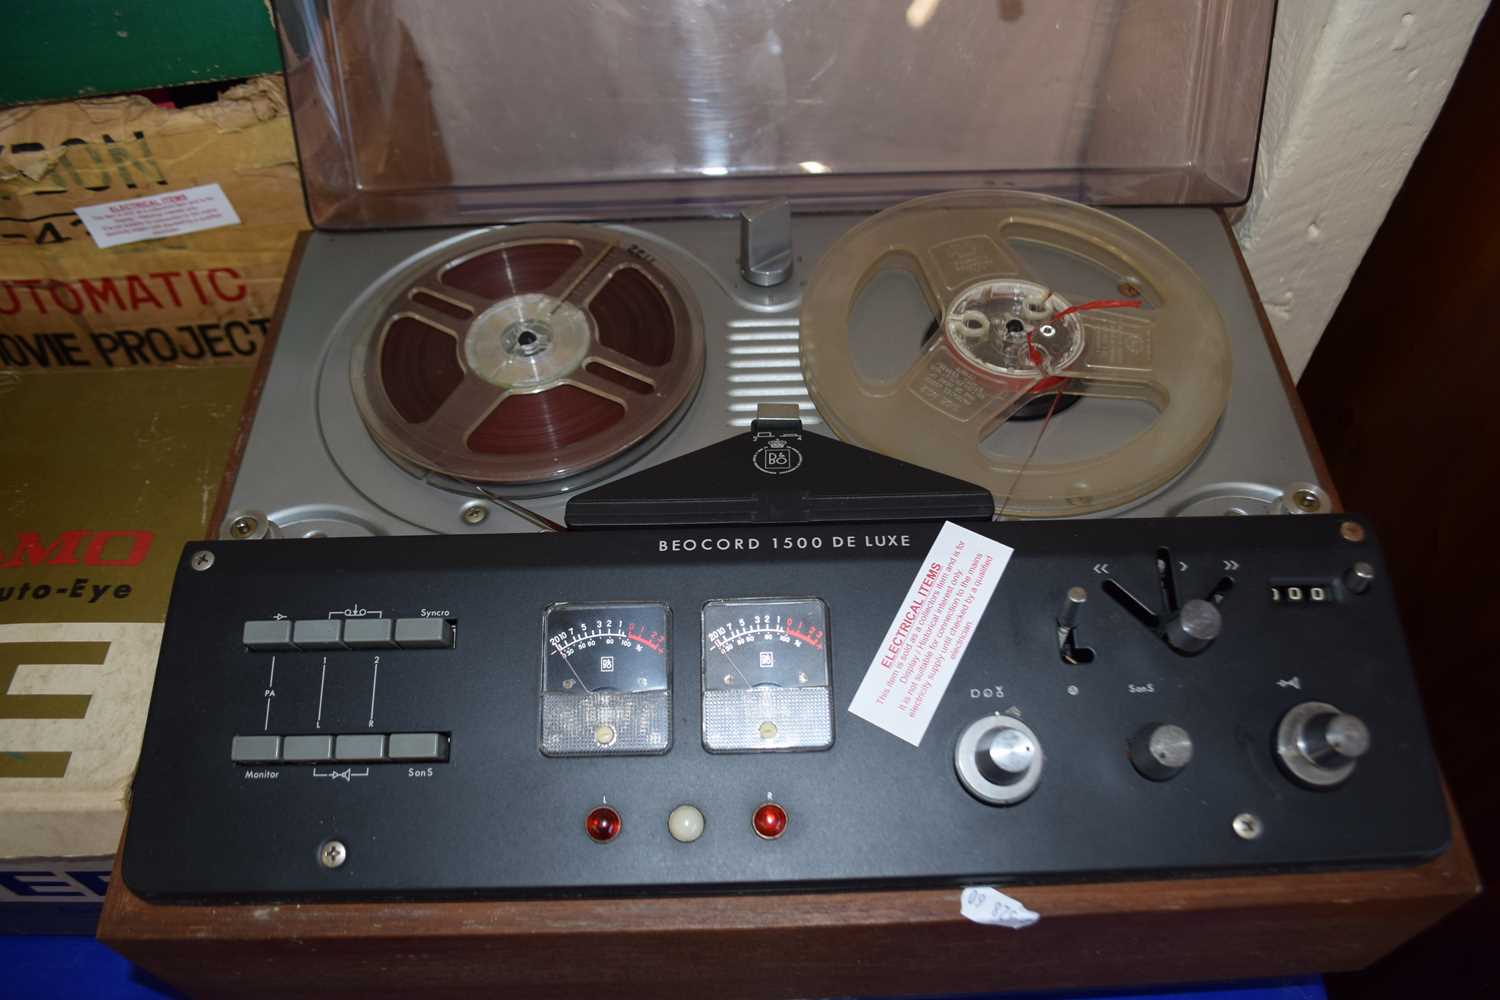 Beocord 1500 Deluxe reel to reel tape recorder